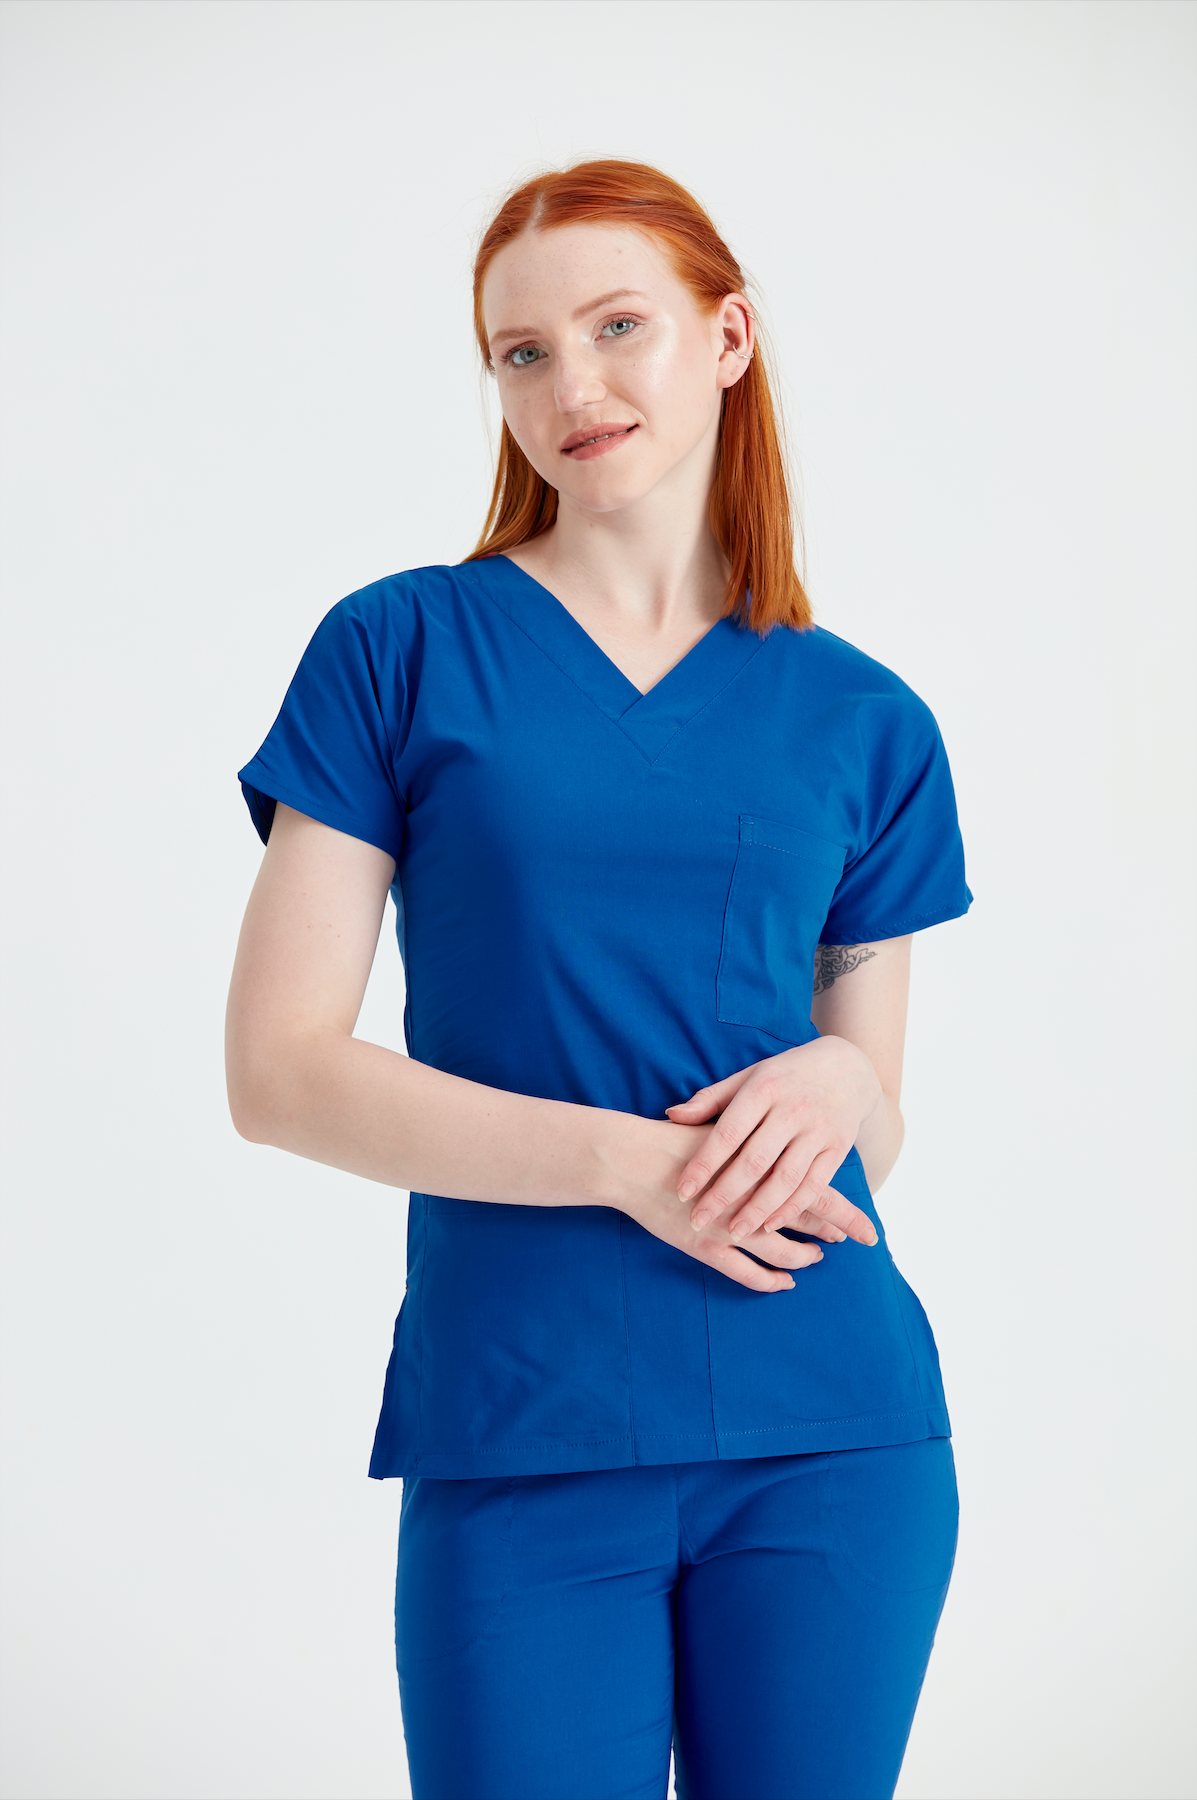 femeie in costum medical din elastan de culoare albastru regal, albastru regal, model Clasic Flex